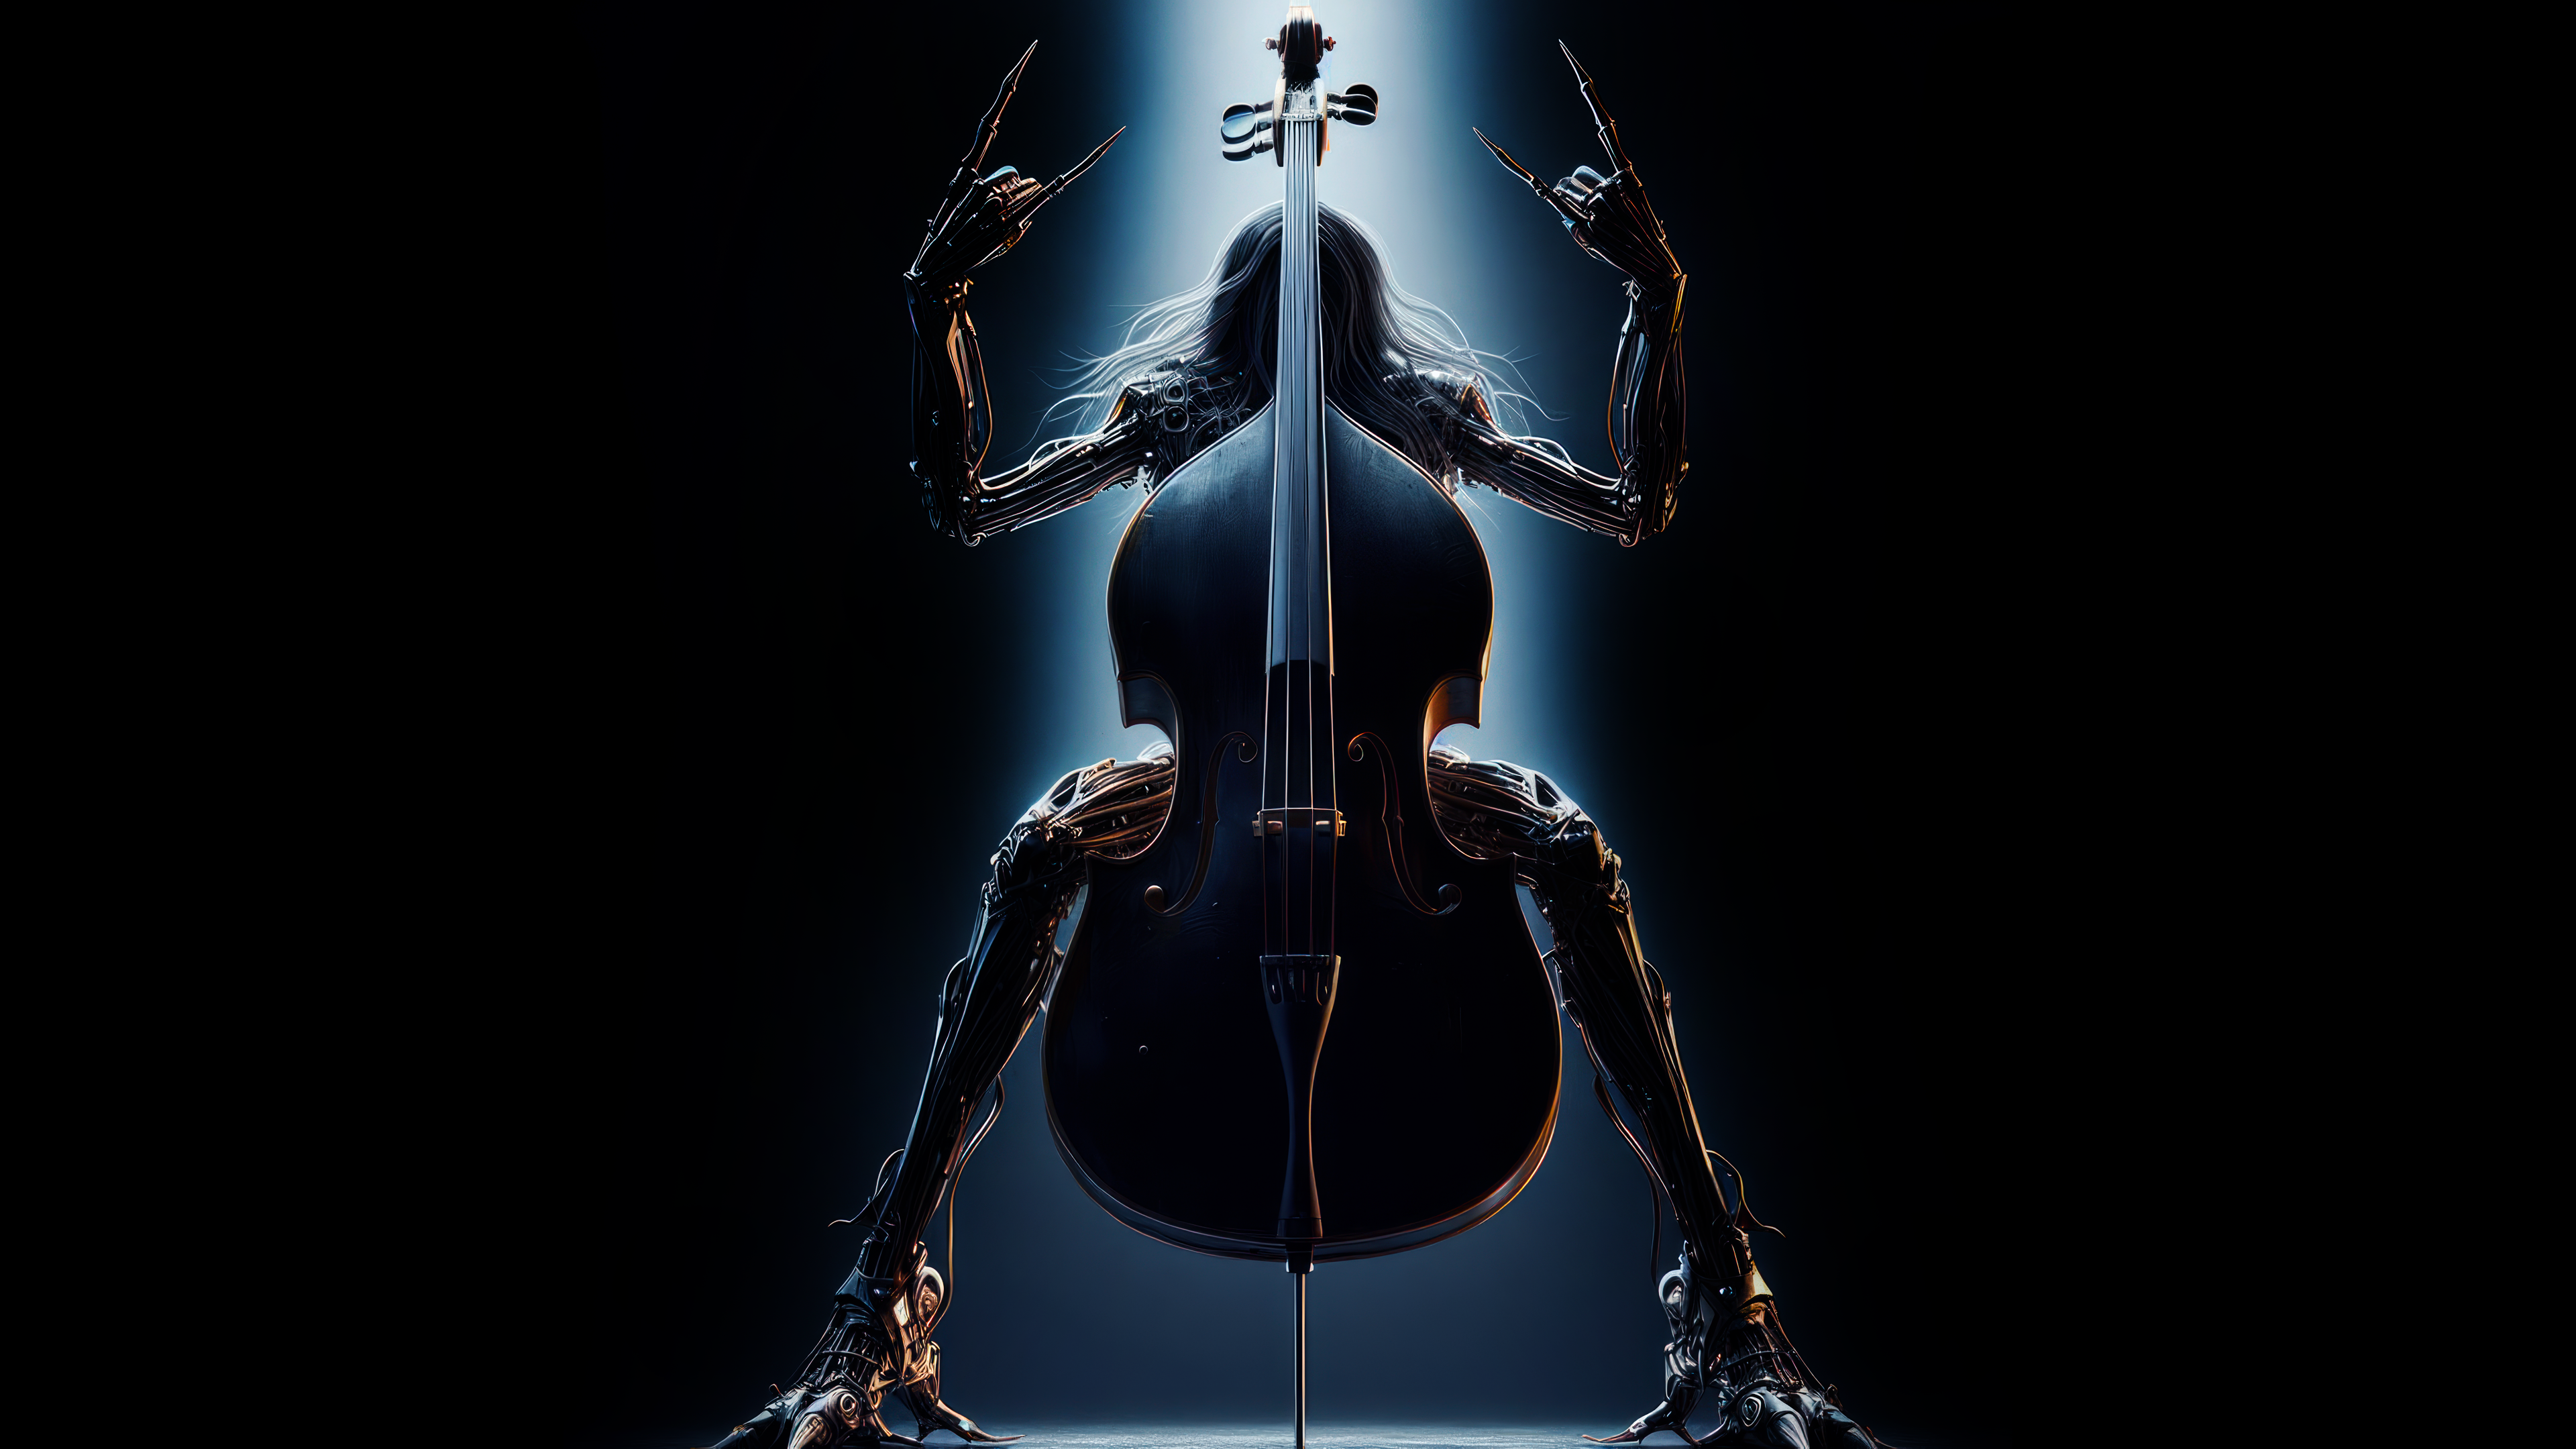 General 3840x2160 music rock music AI art blue copper cello musical instrument black background standing minimalism digital art